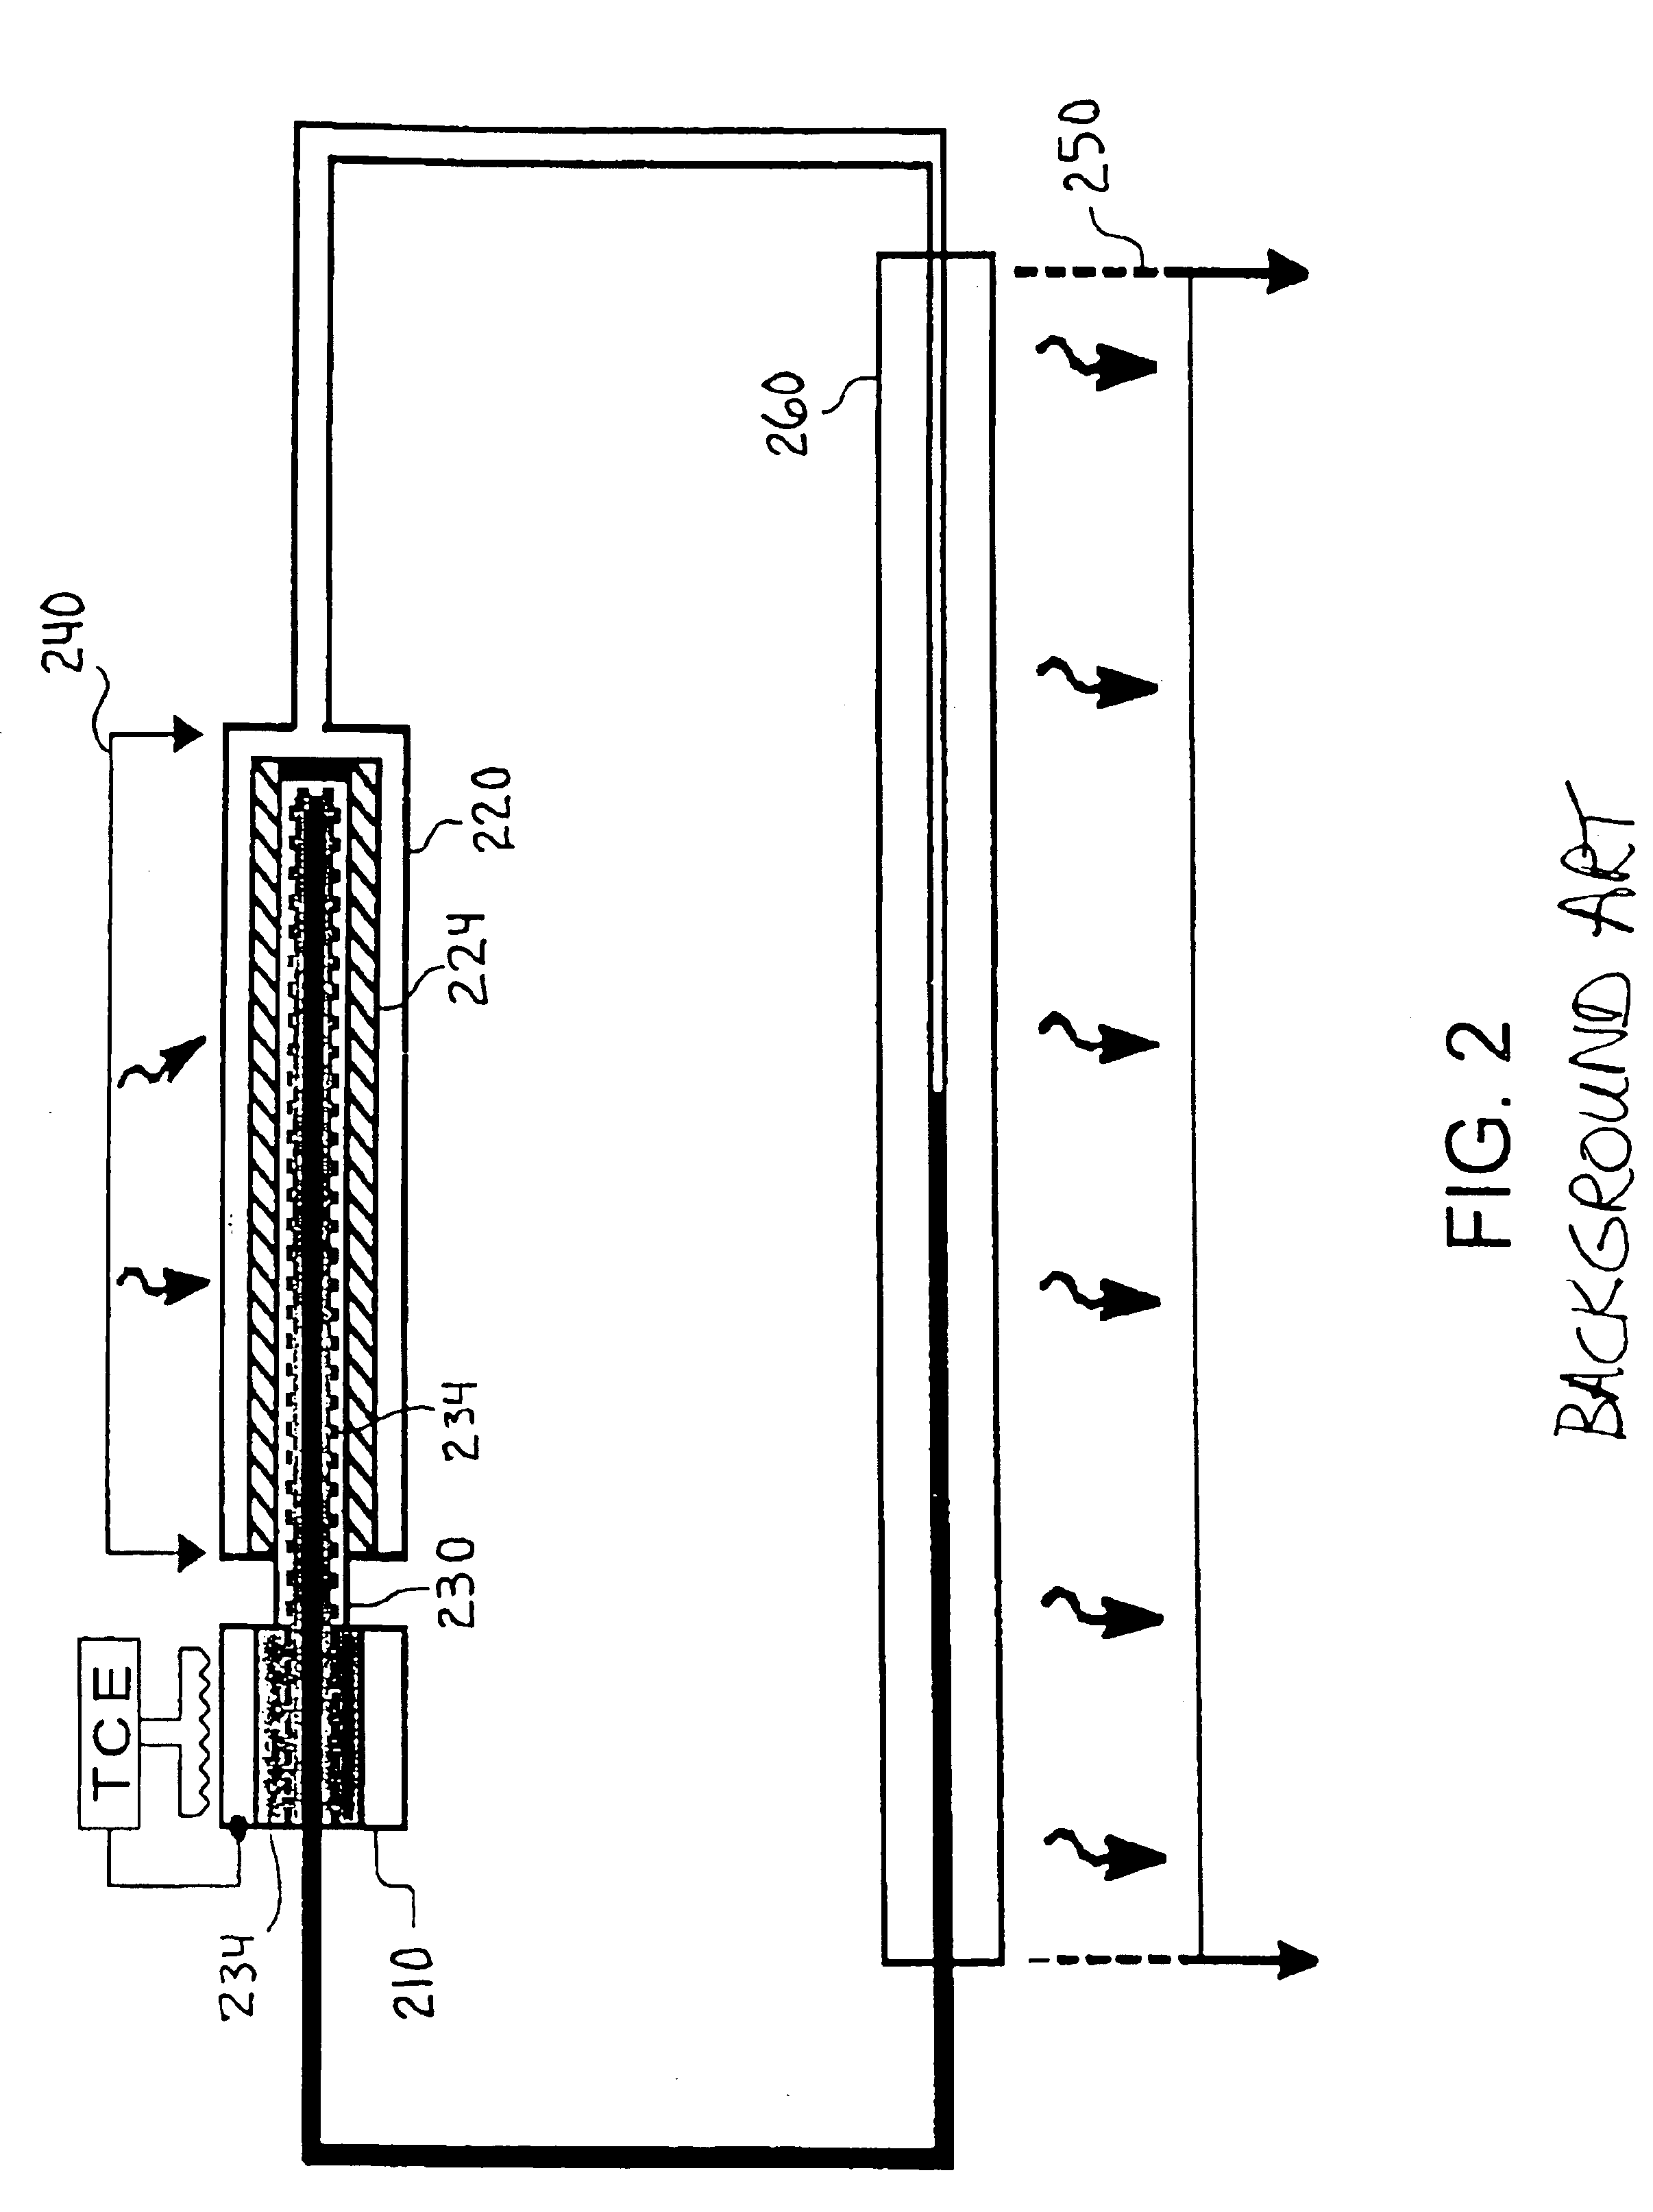 Phase control in the capillary evaporators